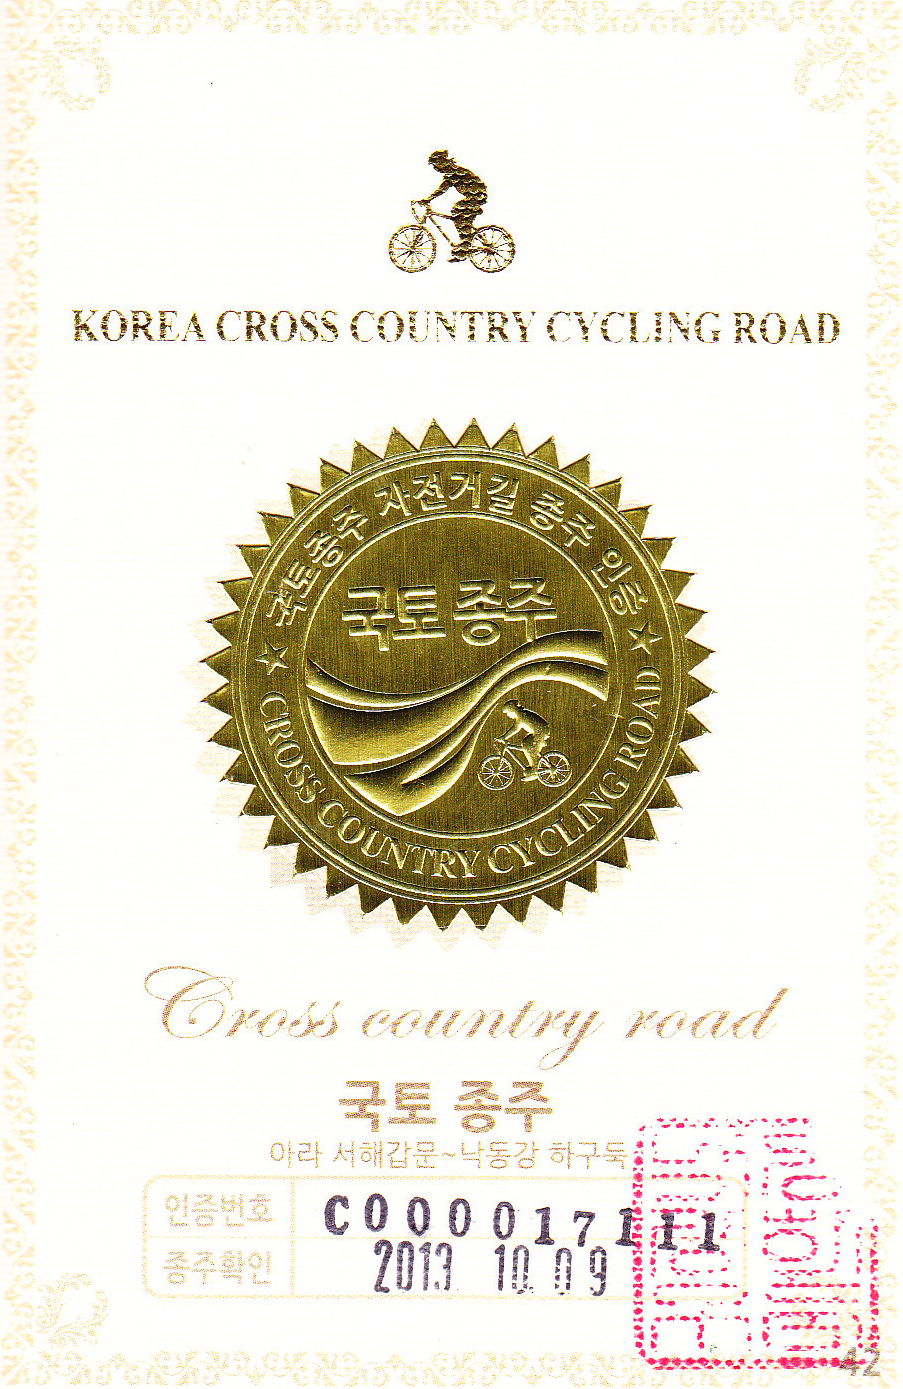 Route - Crosscountry Certificate.jpg